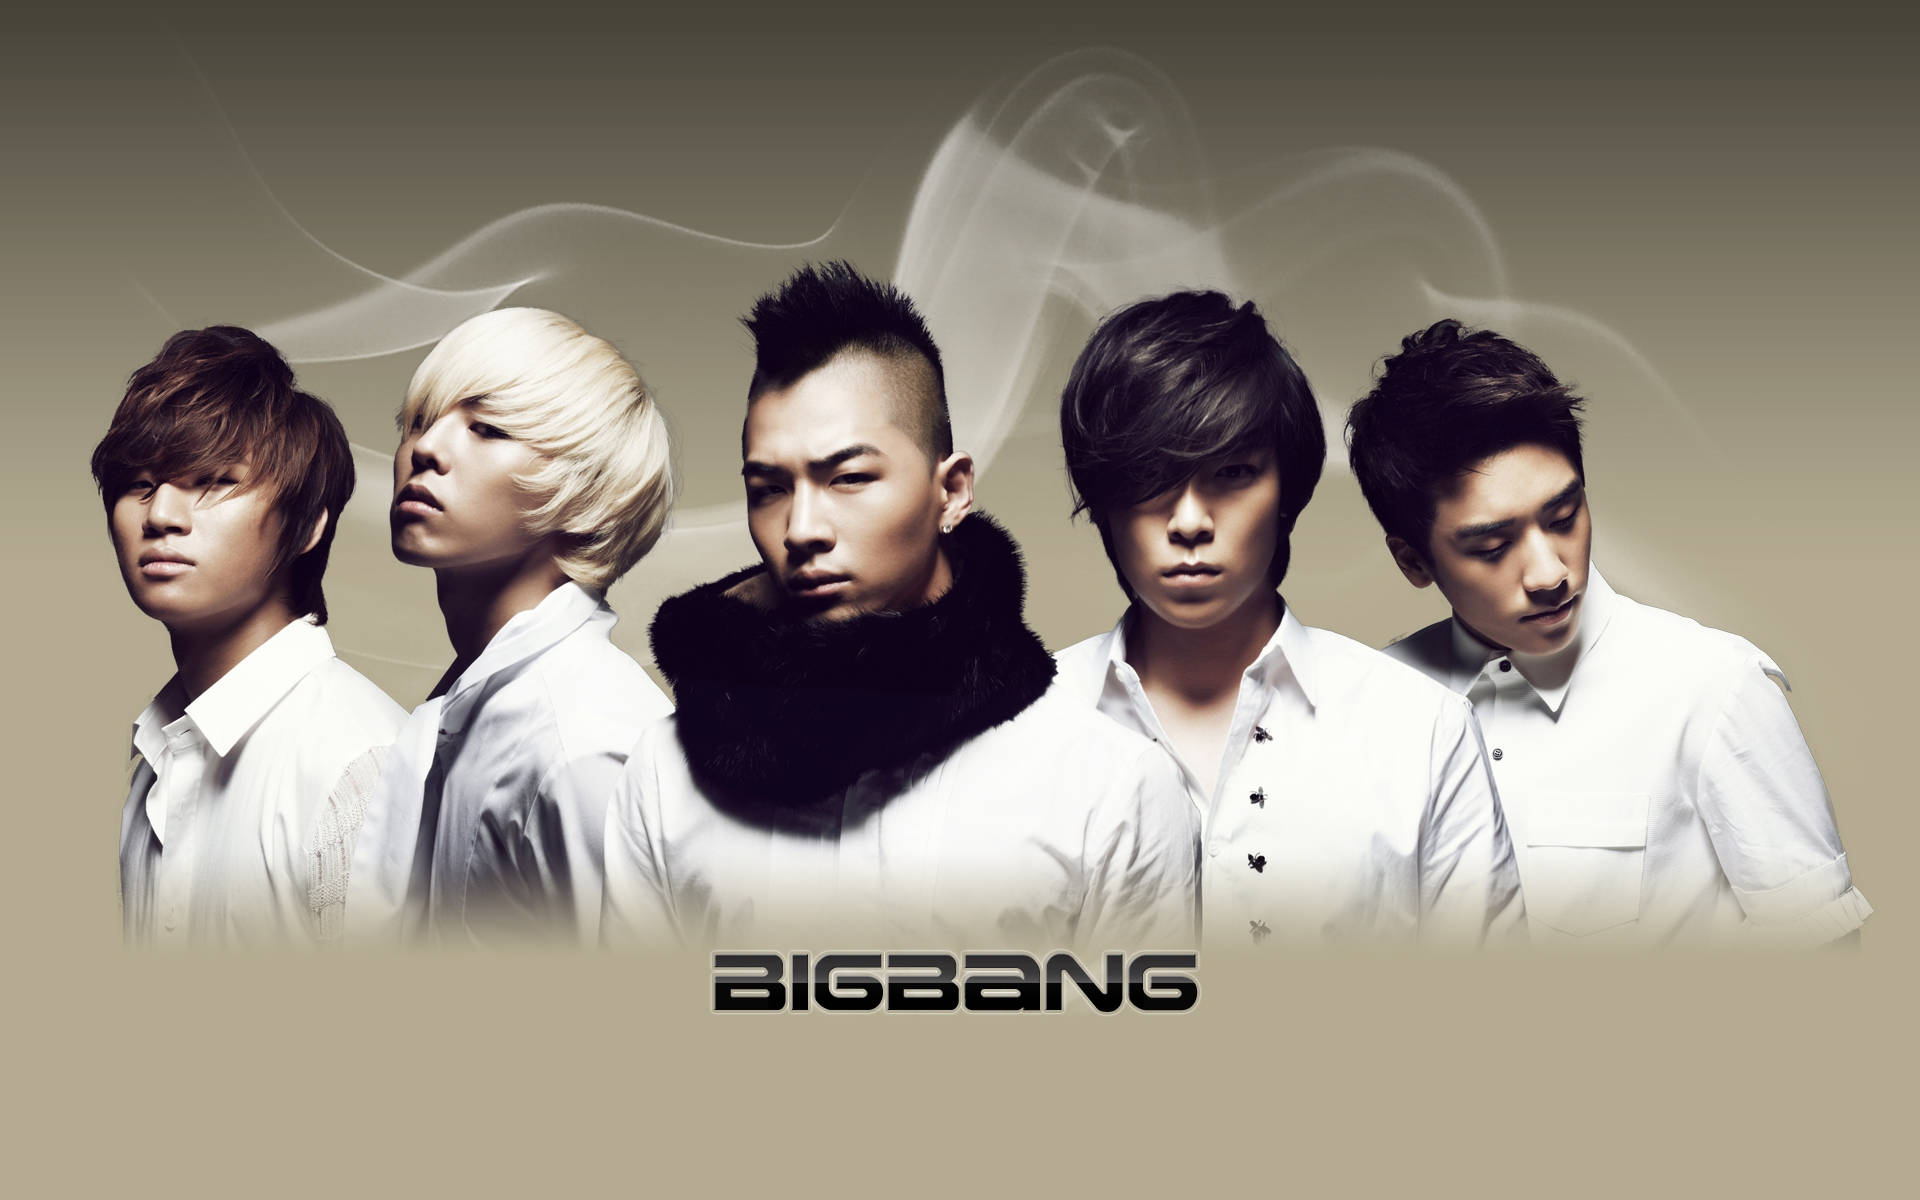 Bigbang Poster With White Smoke Background